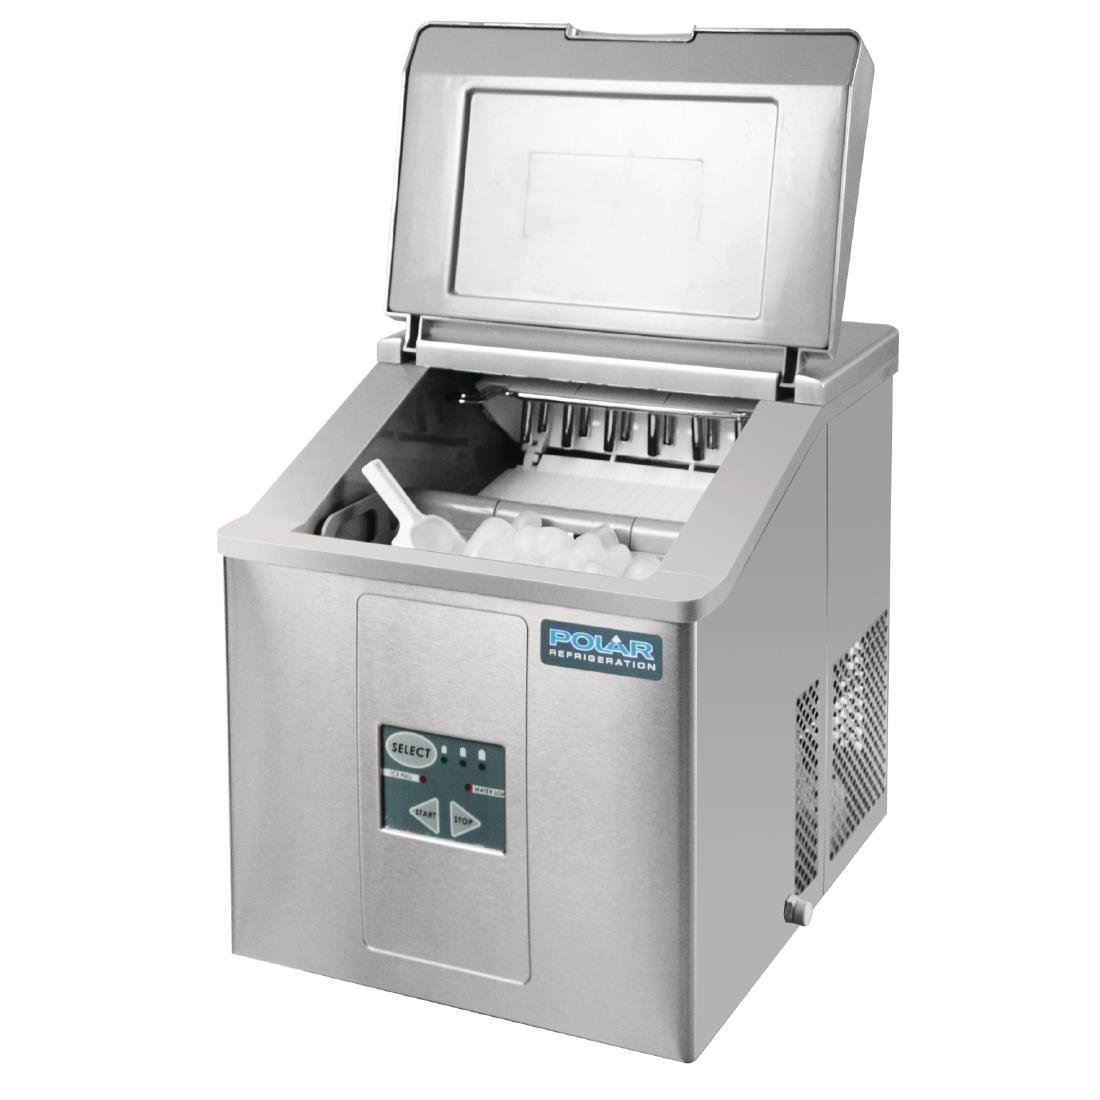 Polar C-Series Countertop Ice Machine 17kg Output